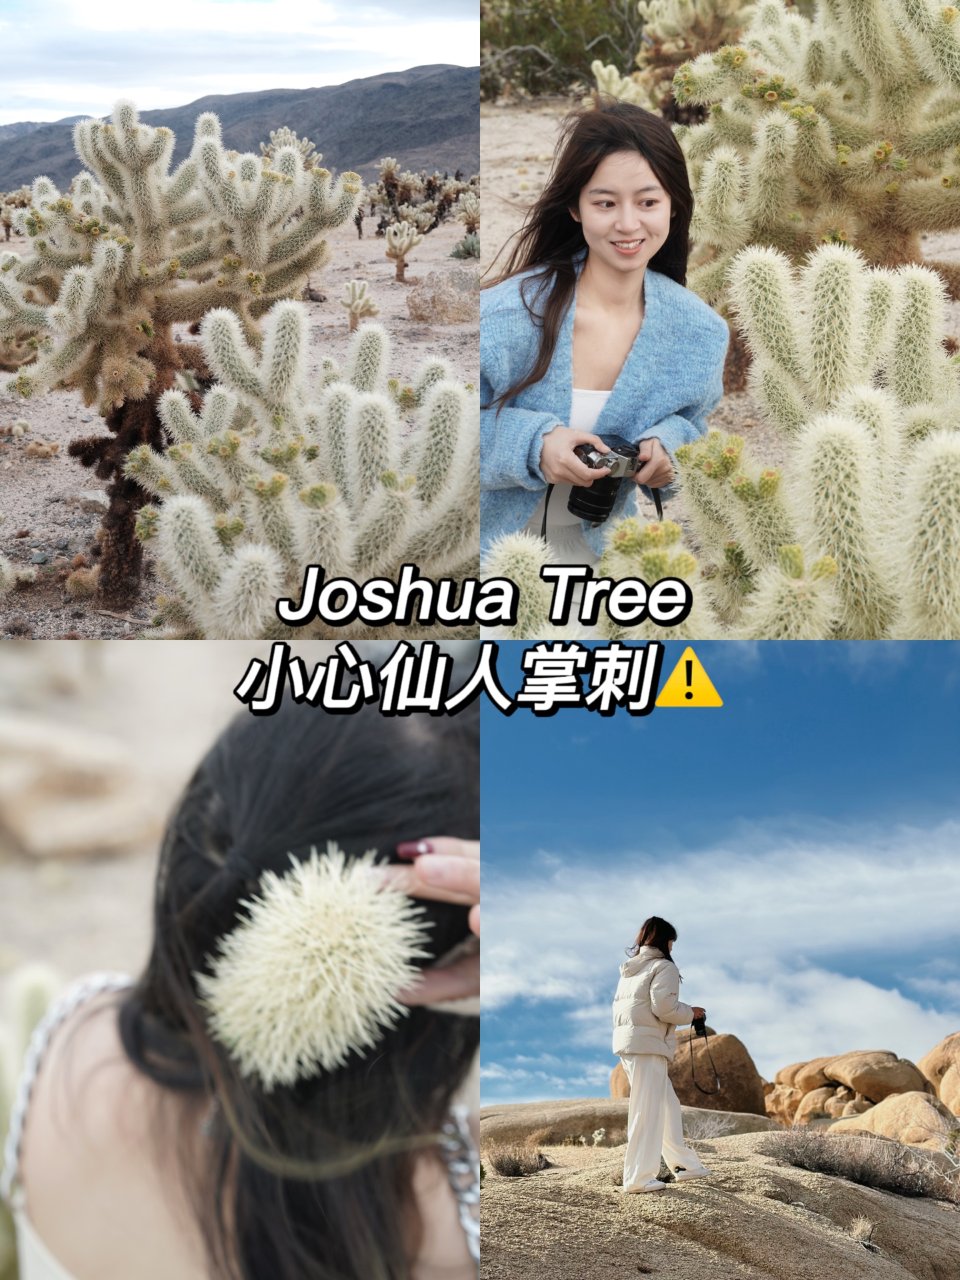 Joshua Tree游玩攻略及被扎注意...